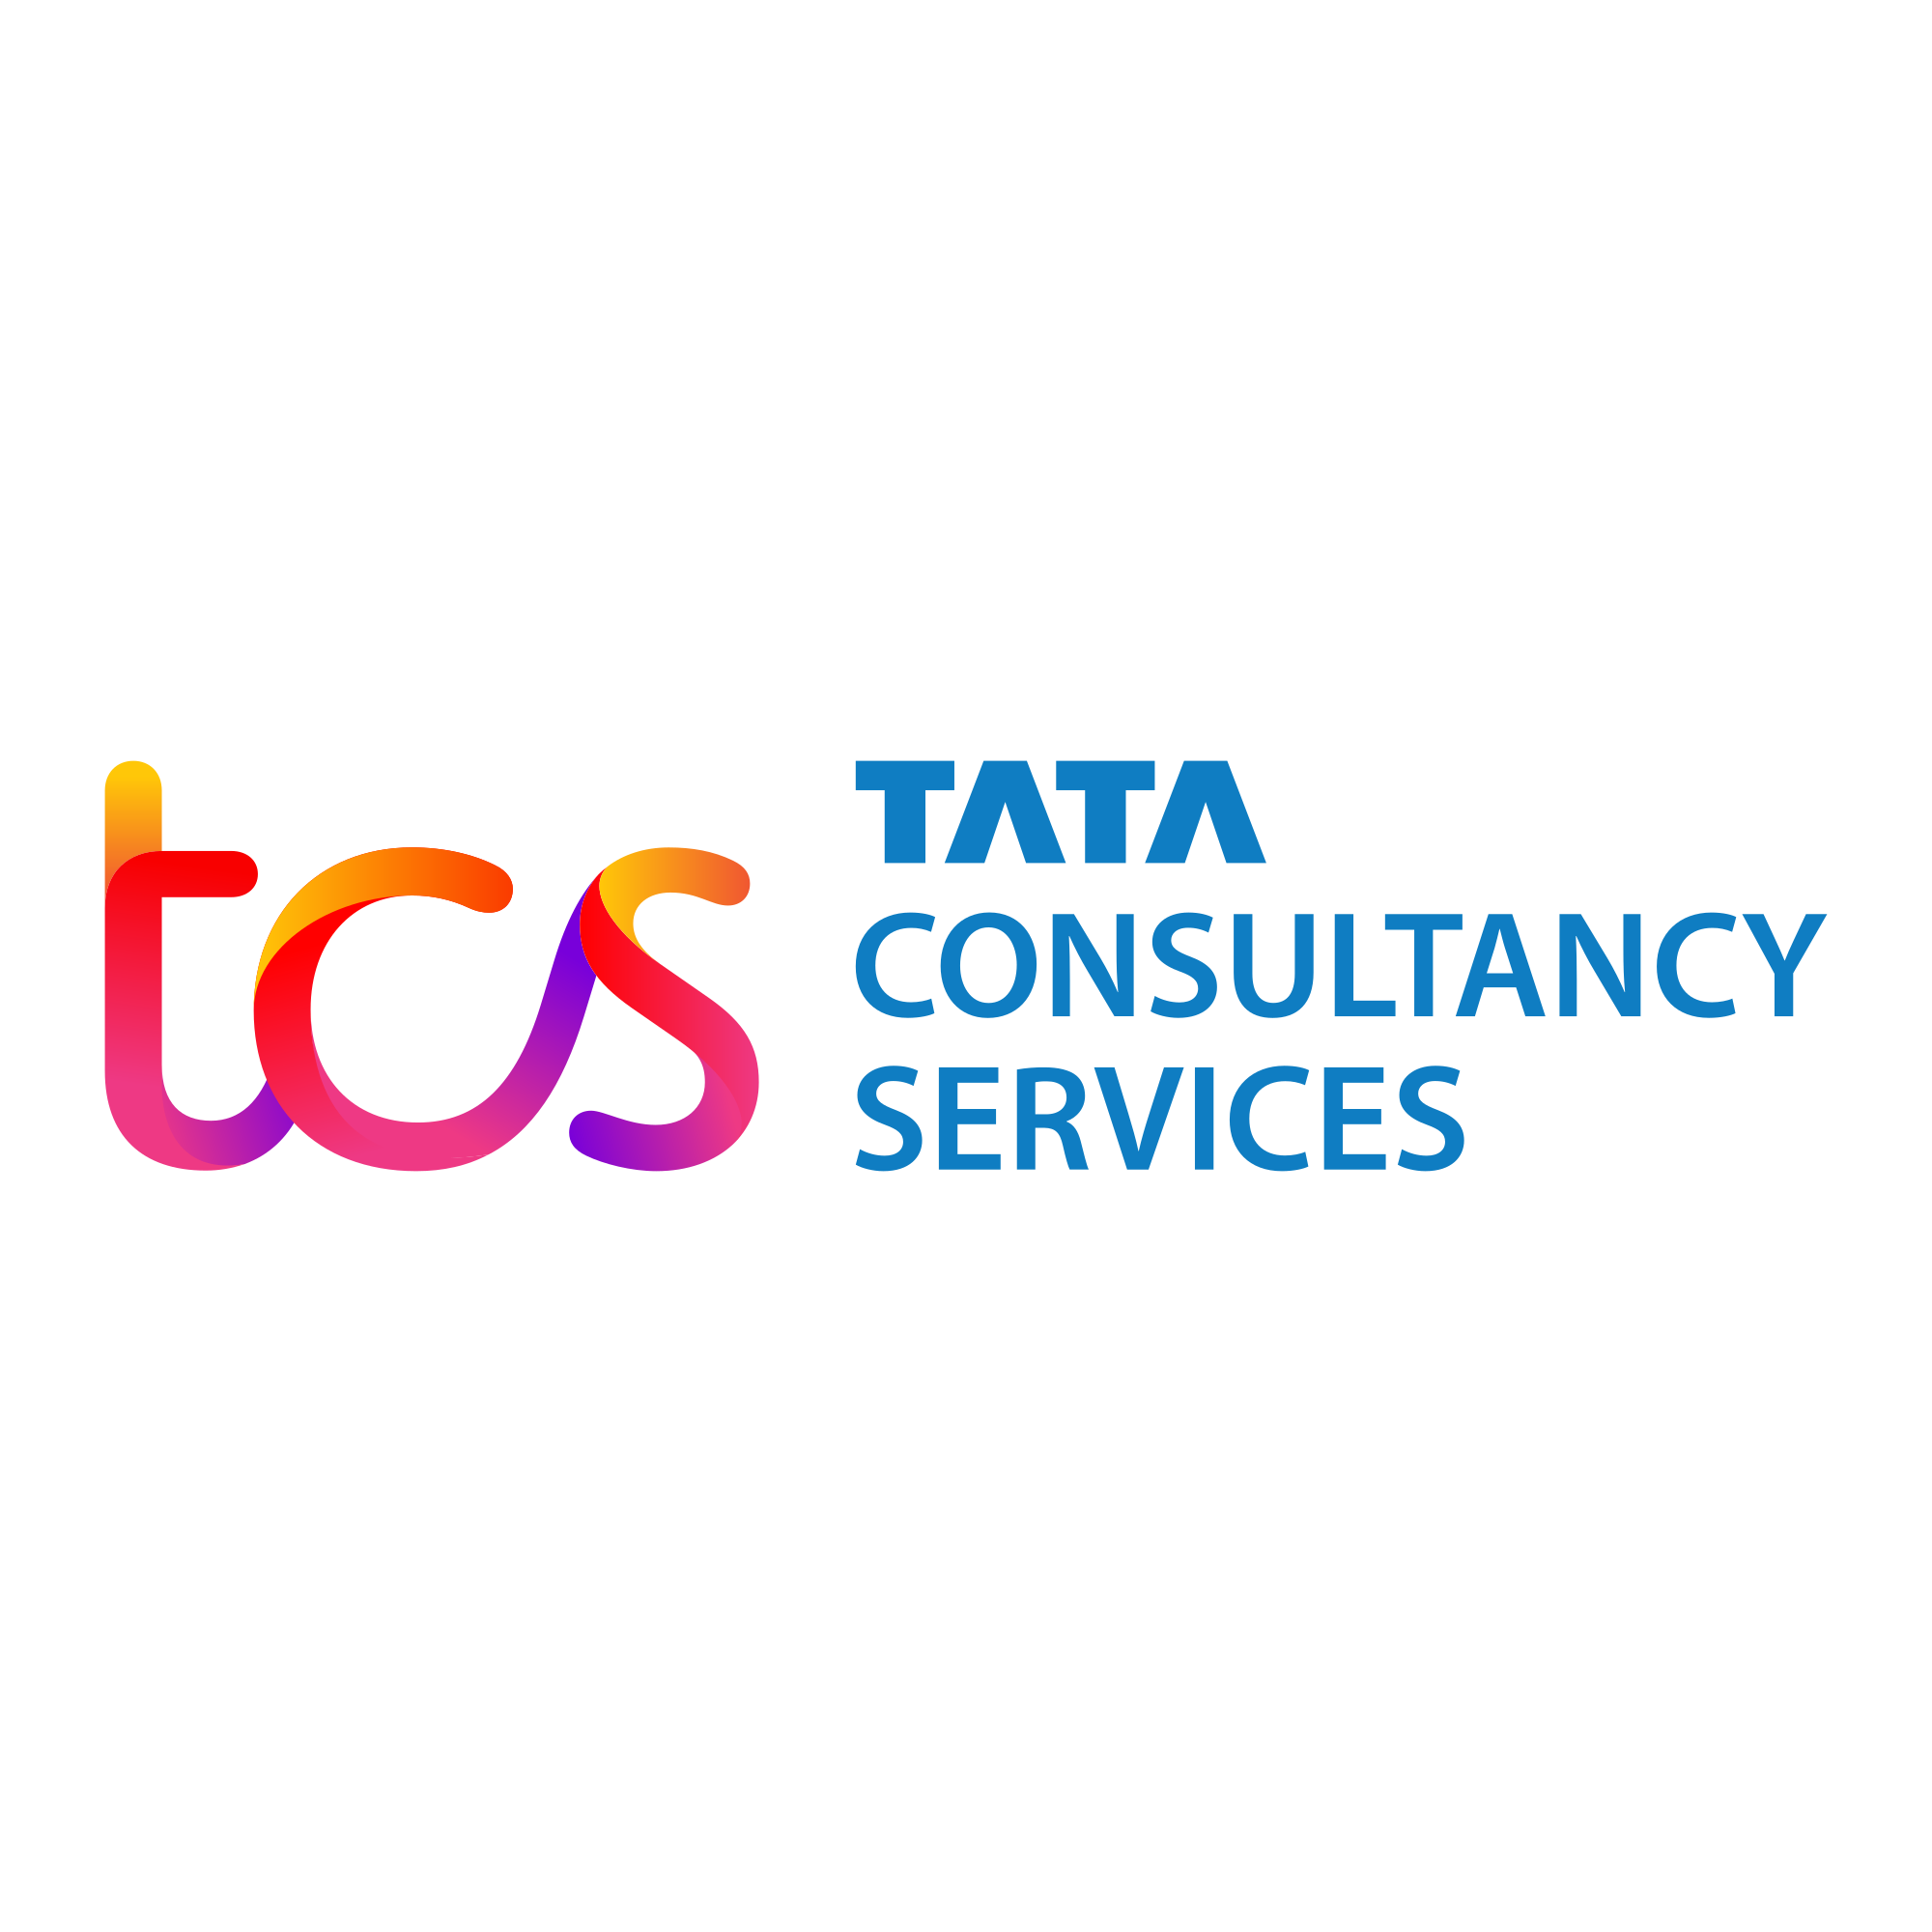 TATA Consultancy Services